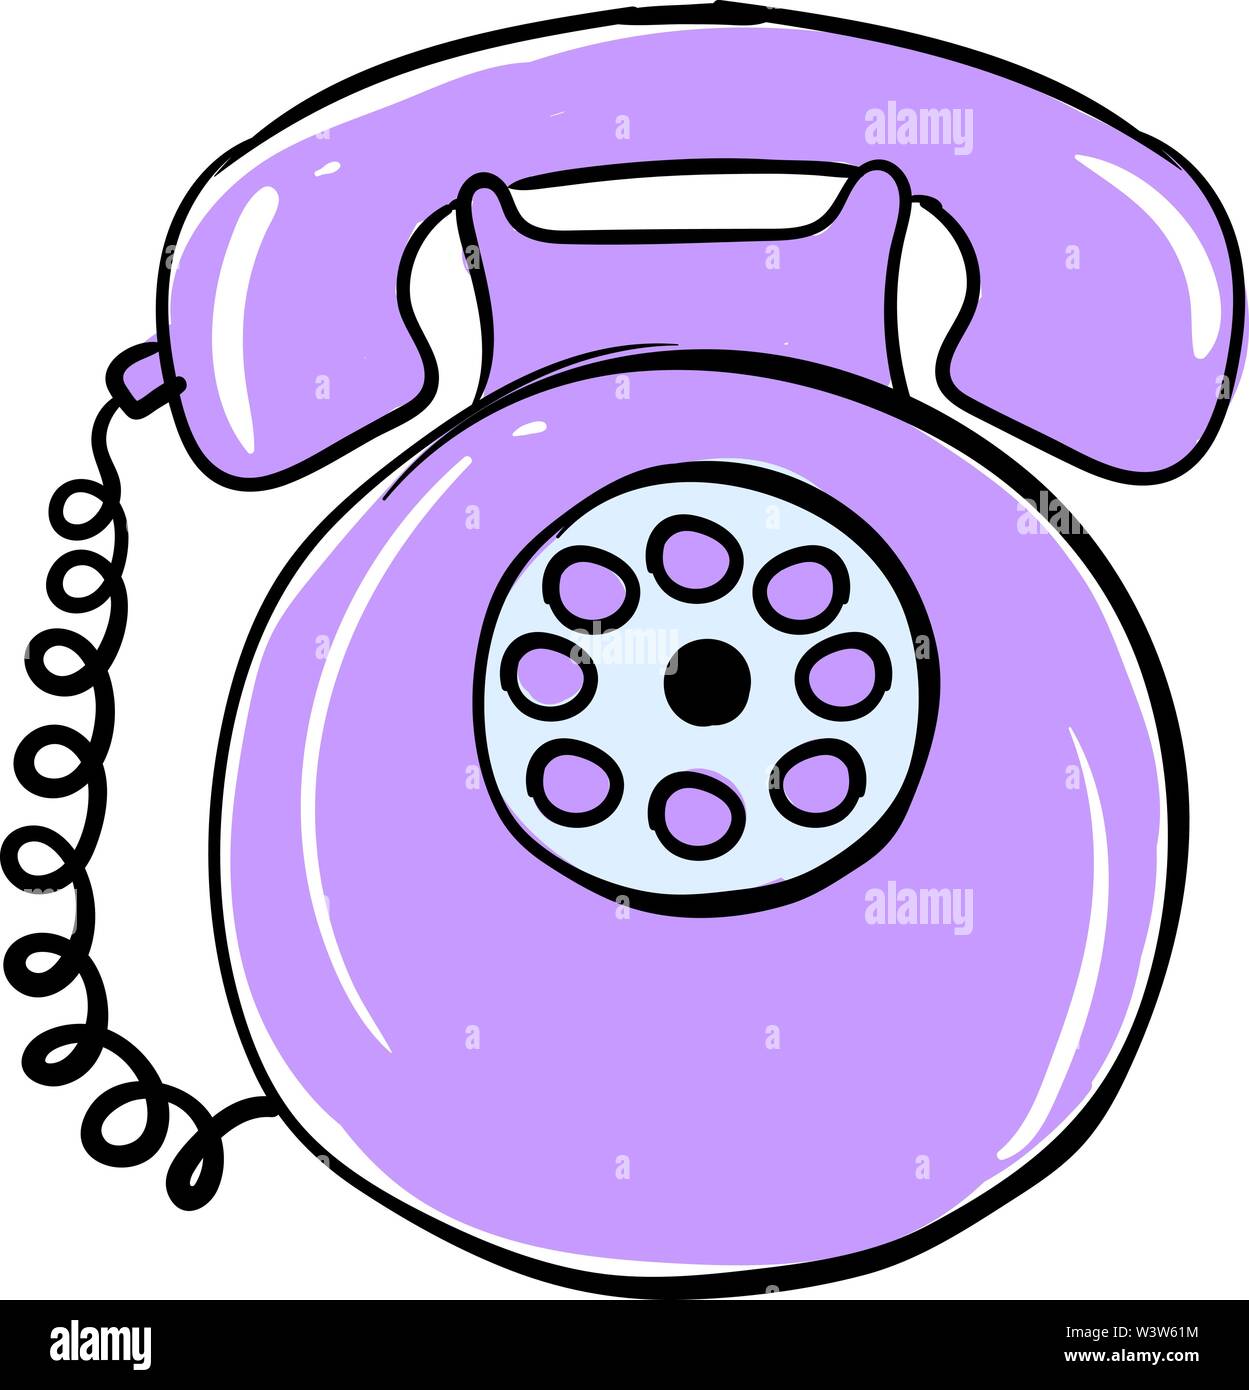 Vector dibujos animados púrpura antiguo teléfono vintage teléfono rotativo  retro